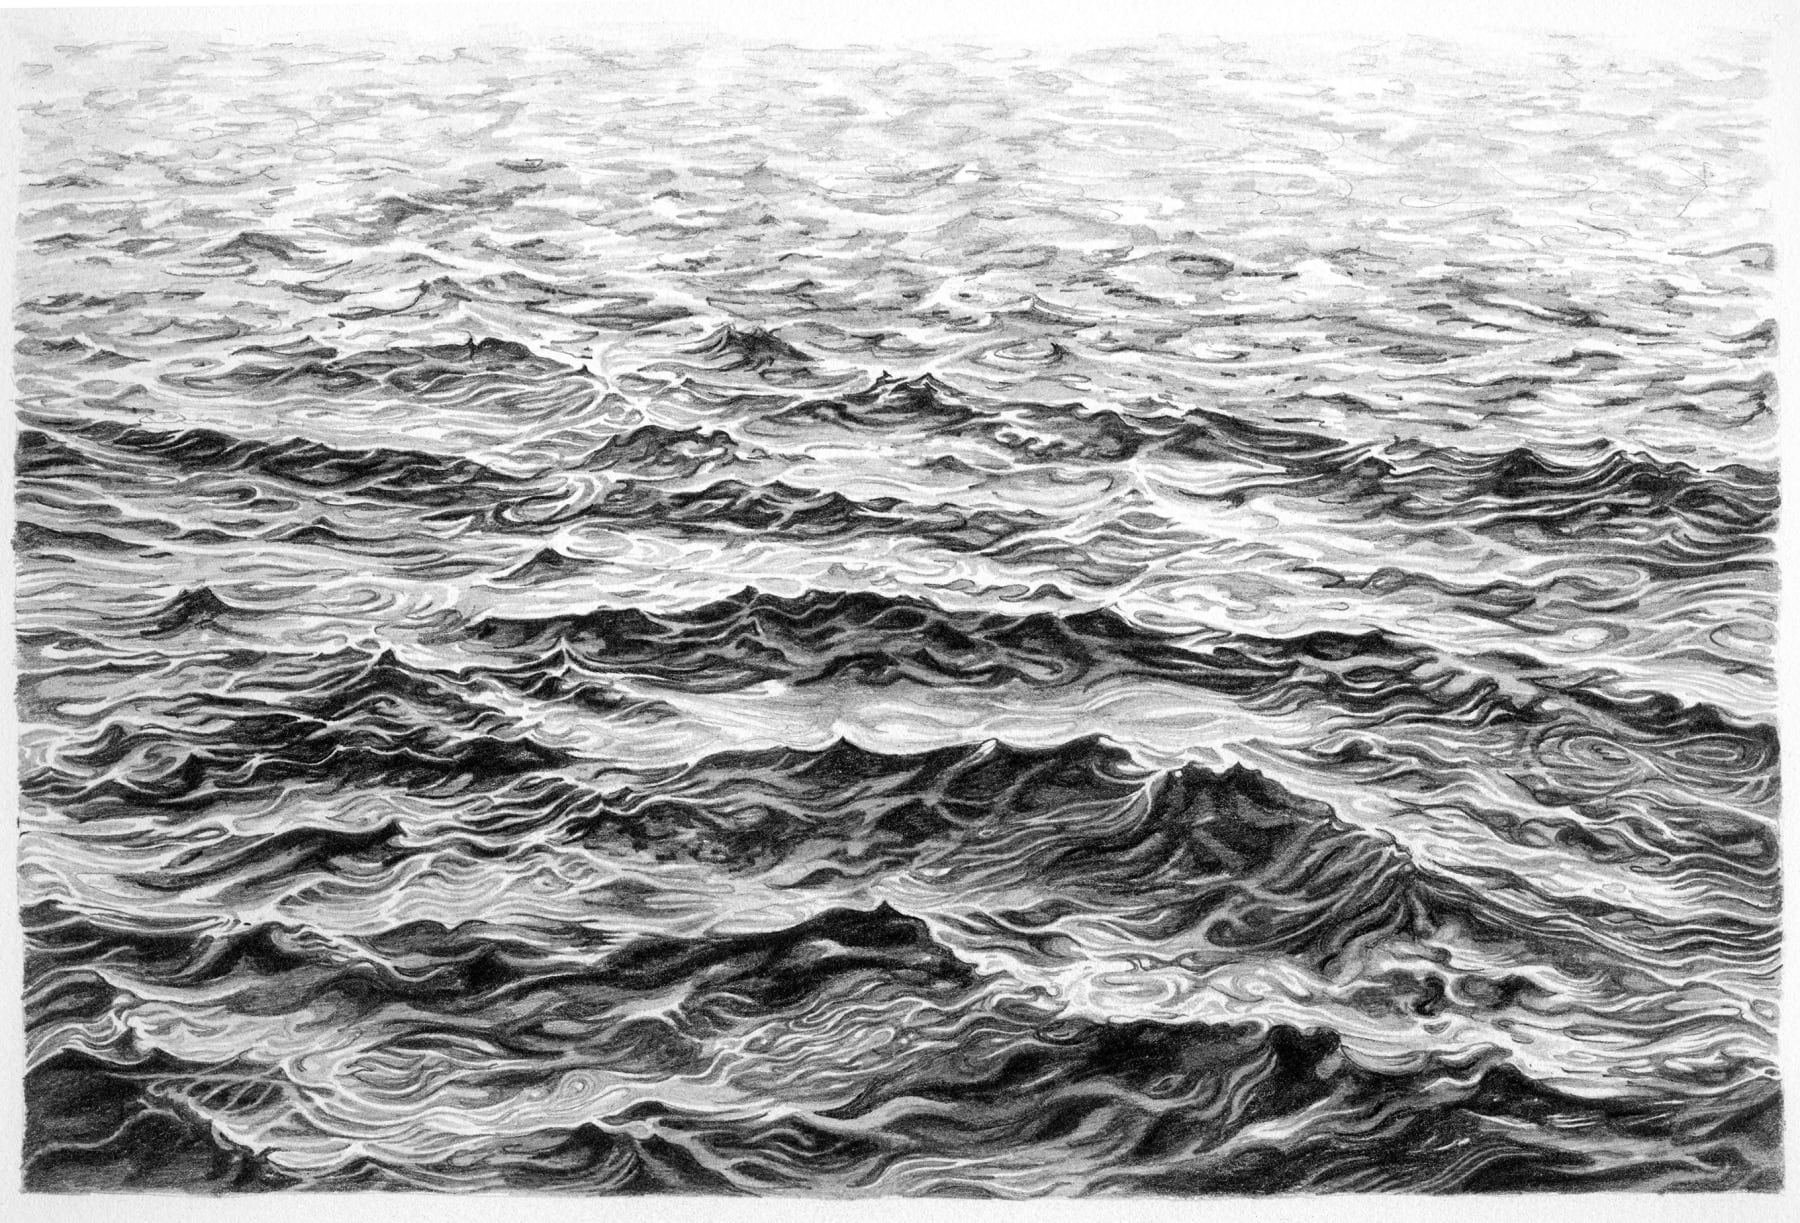 Sophie Bray Oceanic Surface Pencil on Paper Original Natural Oak Frame 50 x 32.5 cm AUD $900 GBP £450